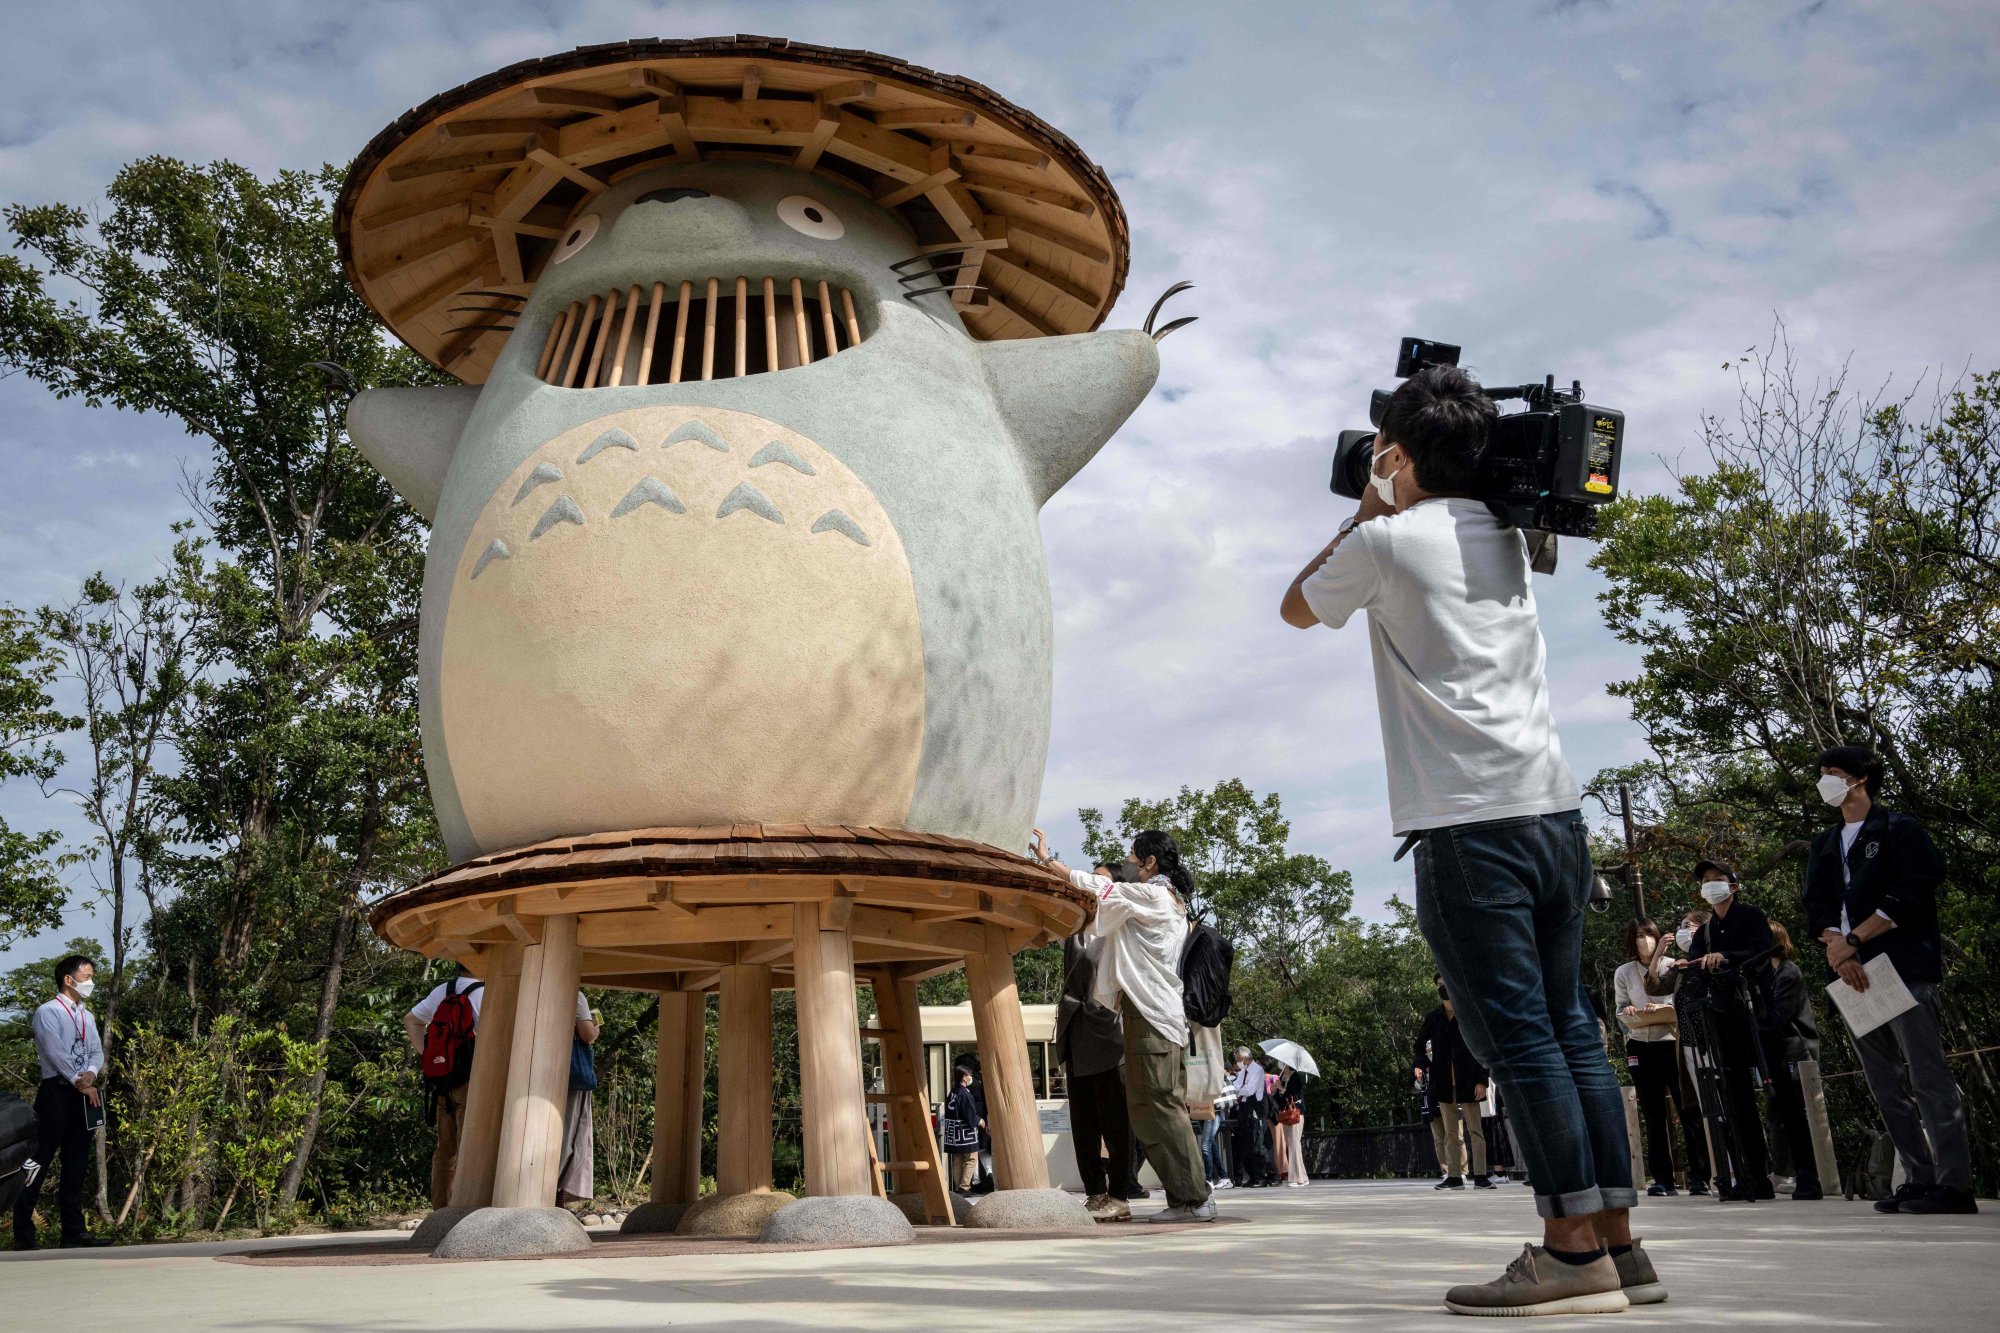 Take a trip on the Cat Bus: Studio Ghibli theme park prepares for